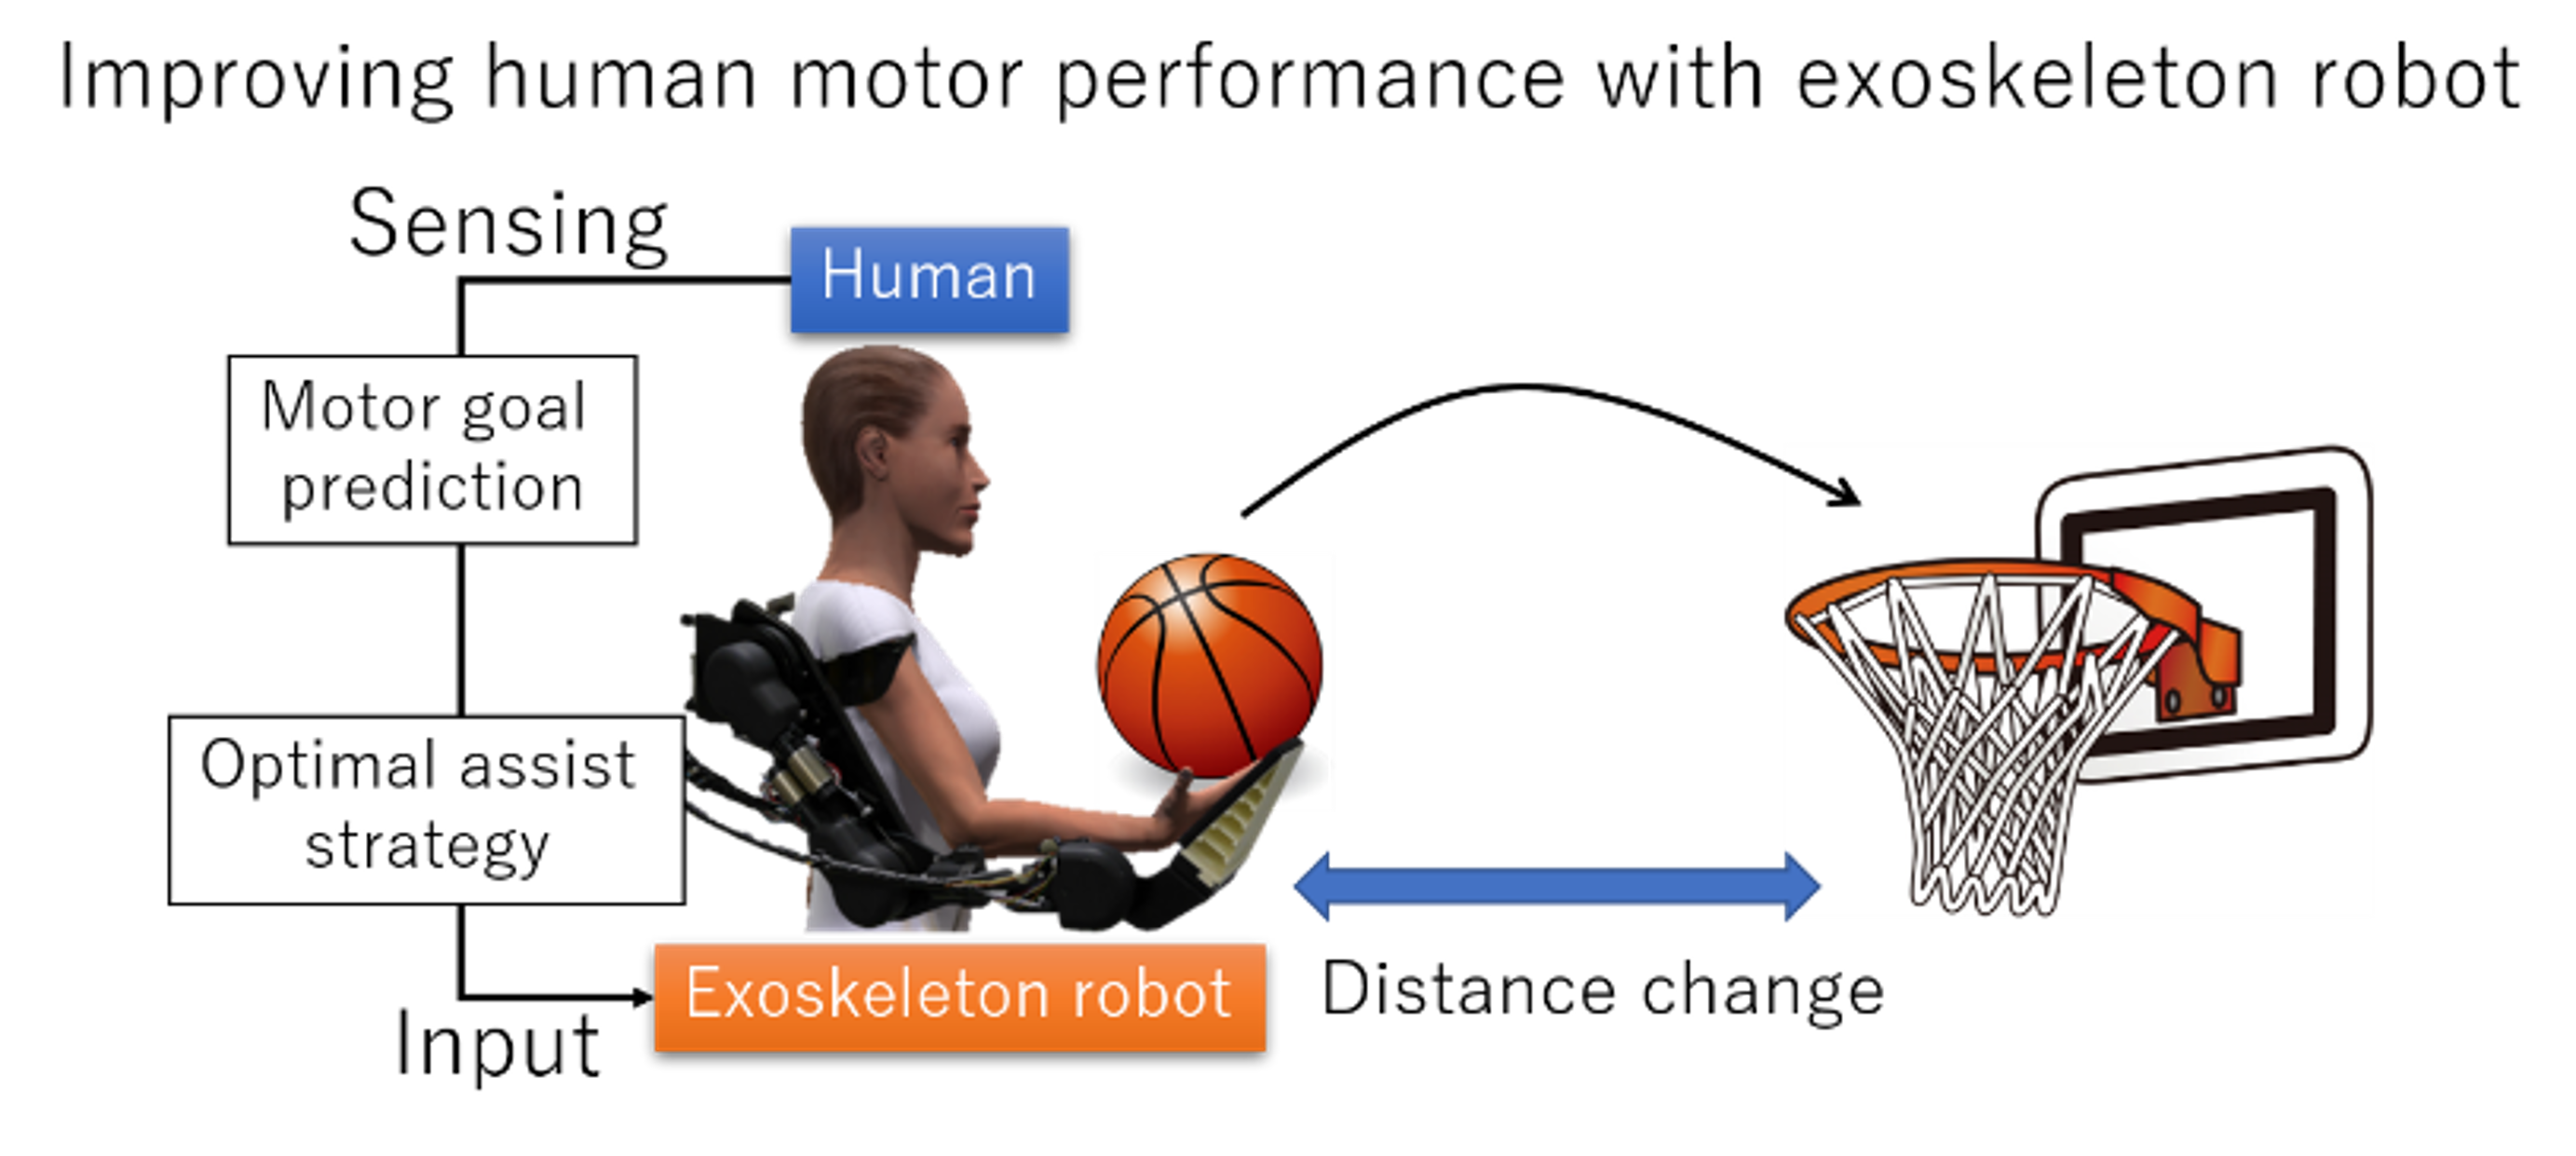 Improving human motor performance with exoskeleton robot